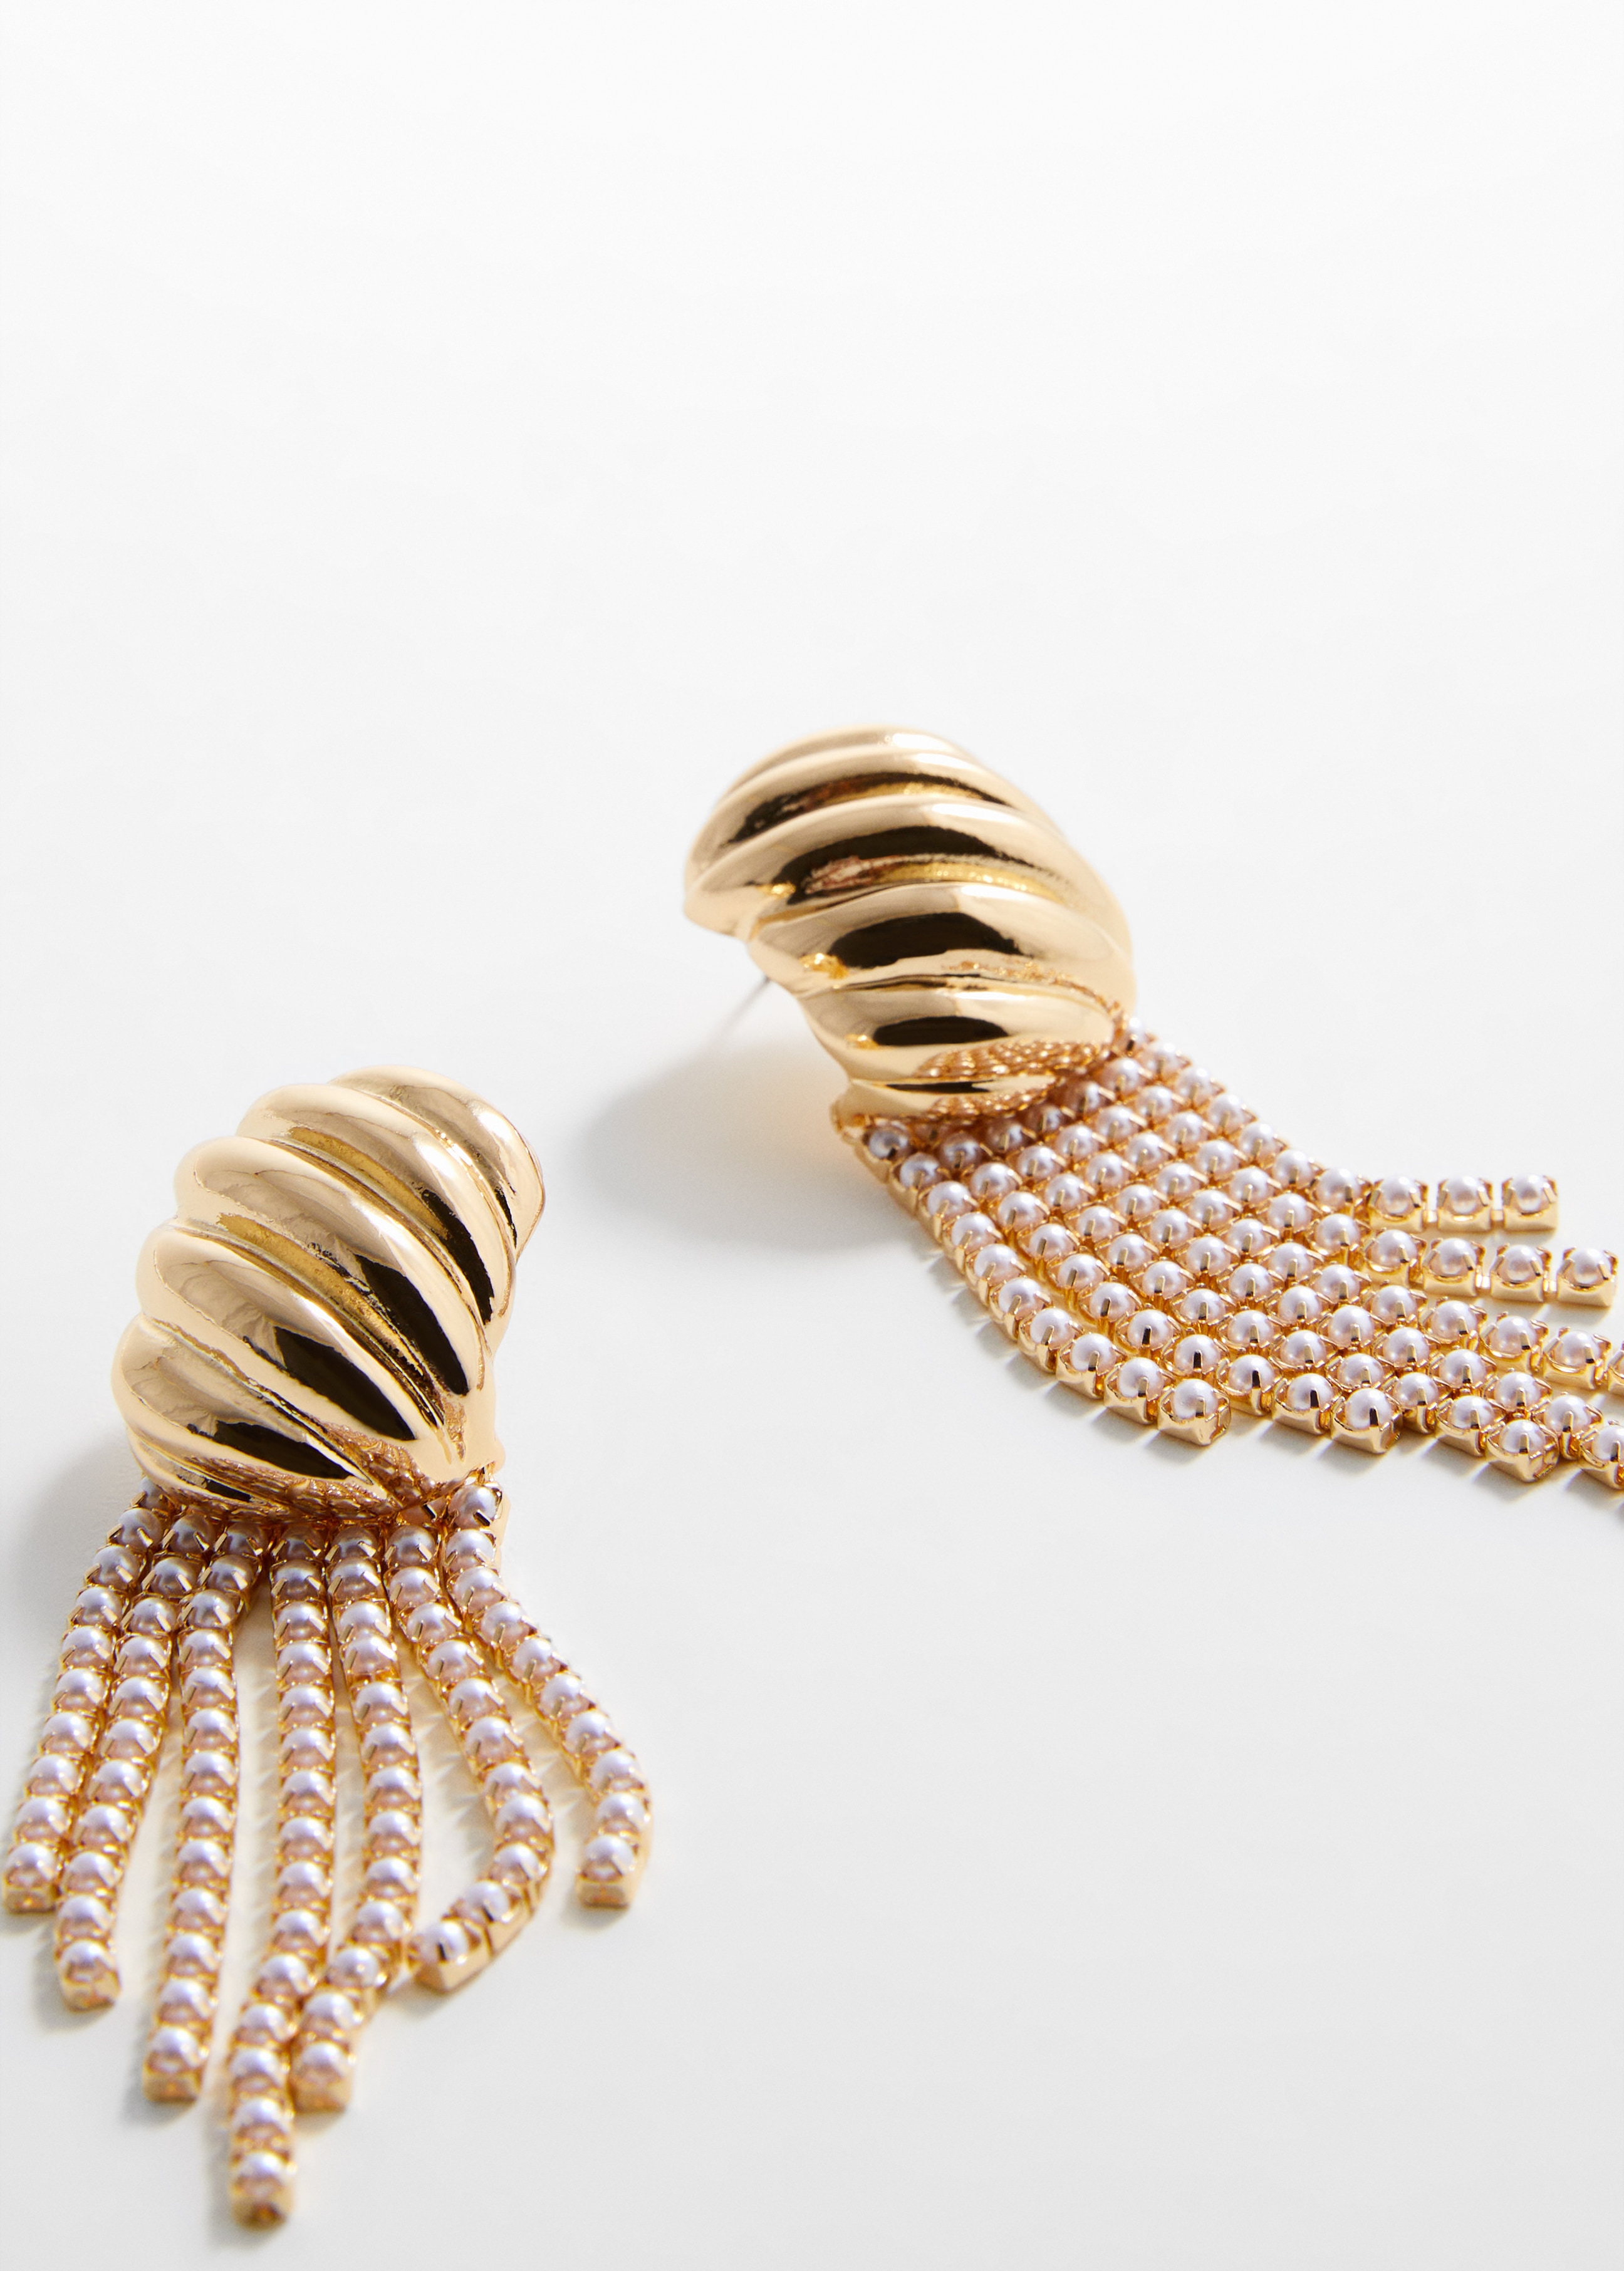 Pearl cascade earrings - Medium plane